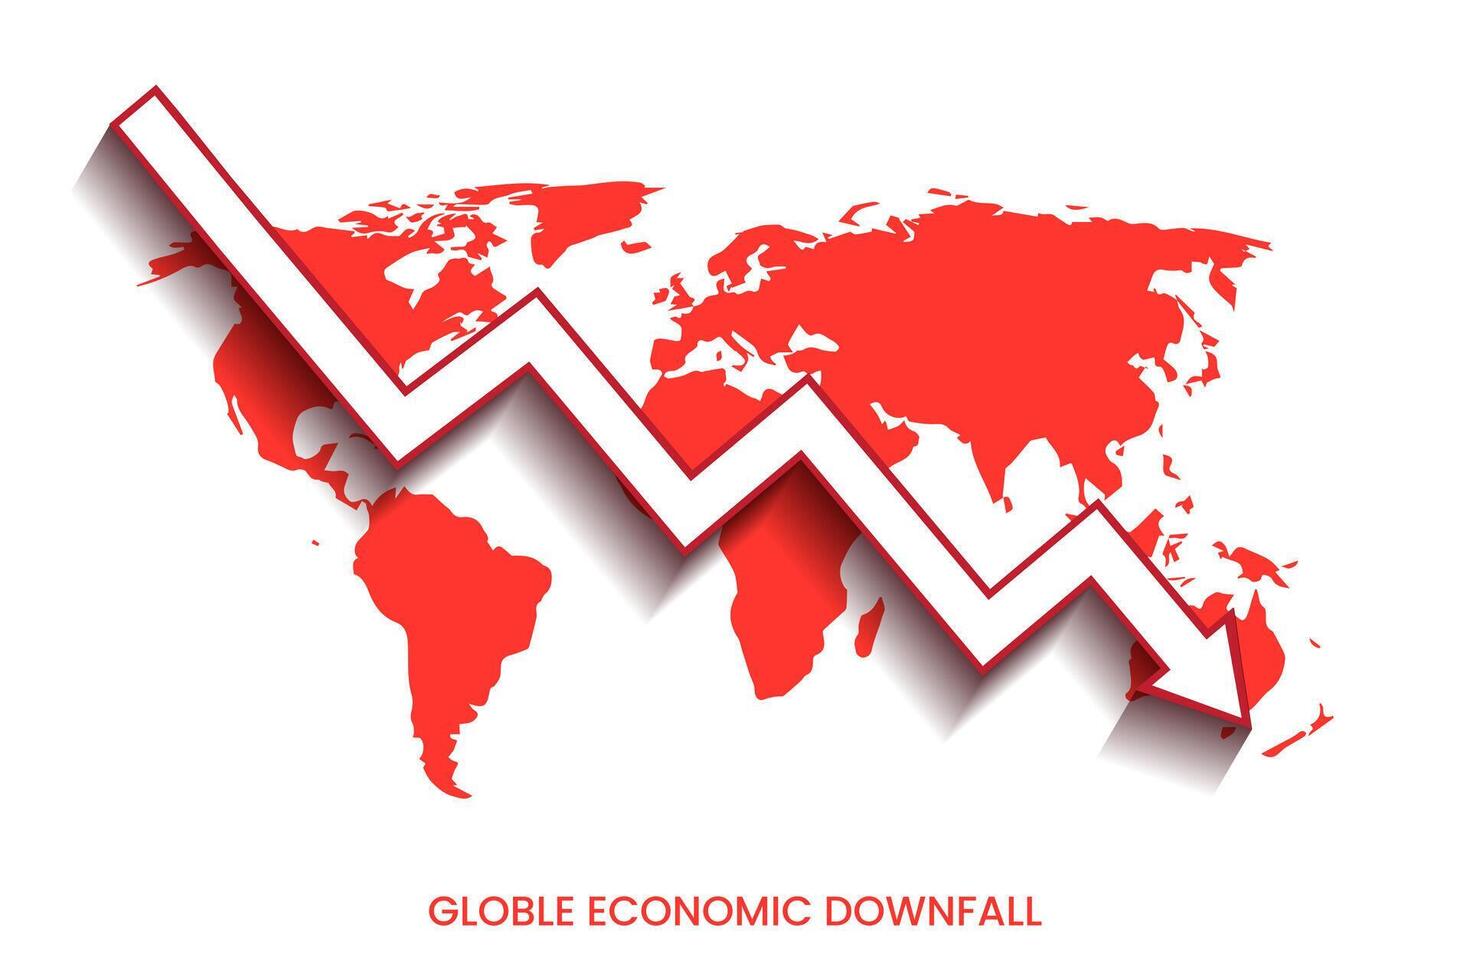 world economy recession stock market financial downfall vector